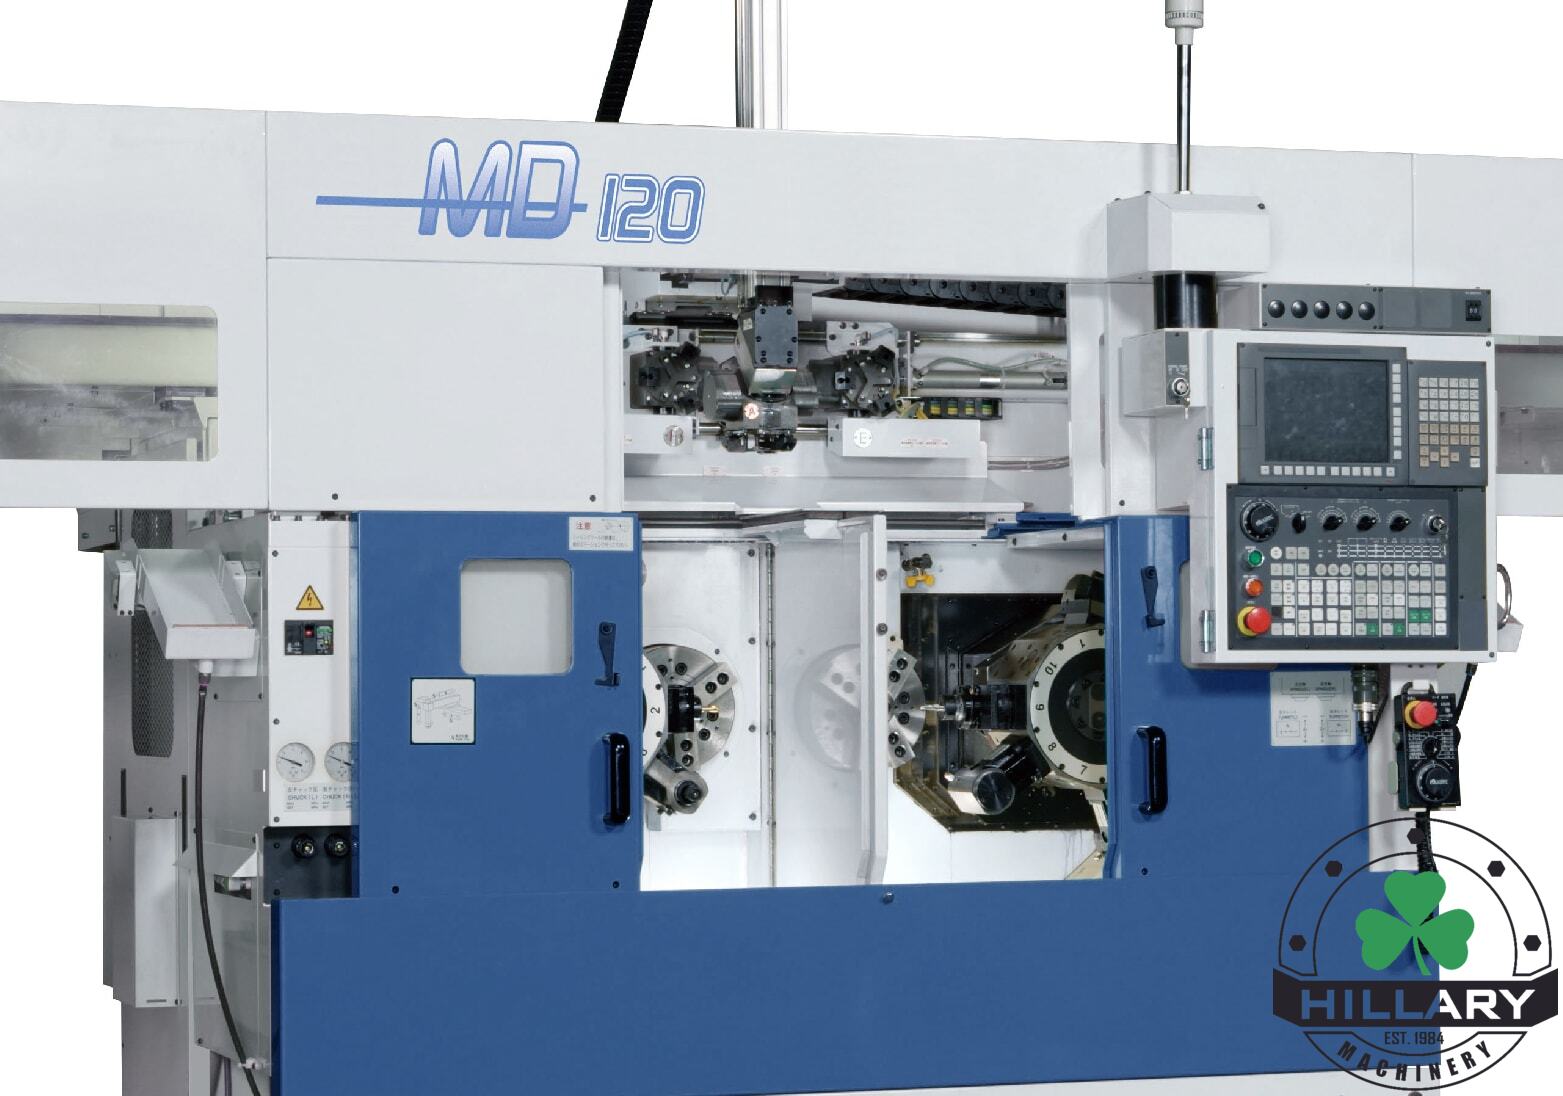 MURATEC MURATA MD120 Automated Turning Centers | Hillary Machinery